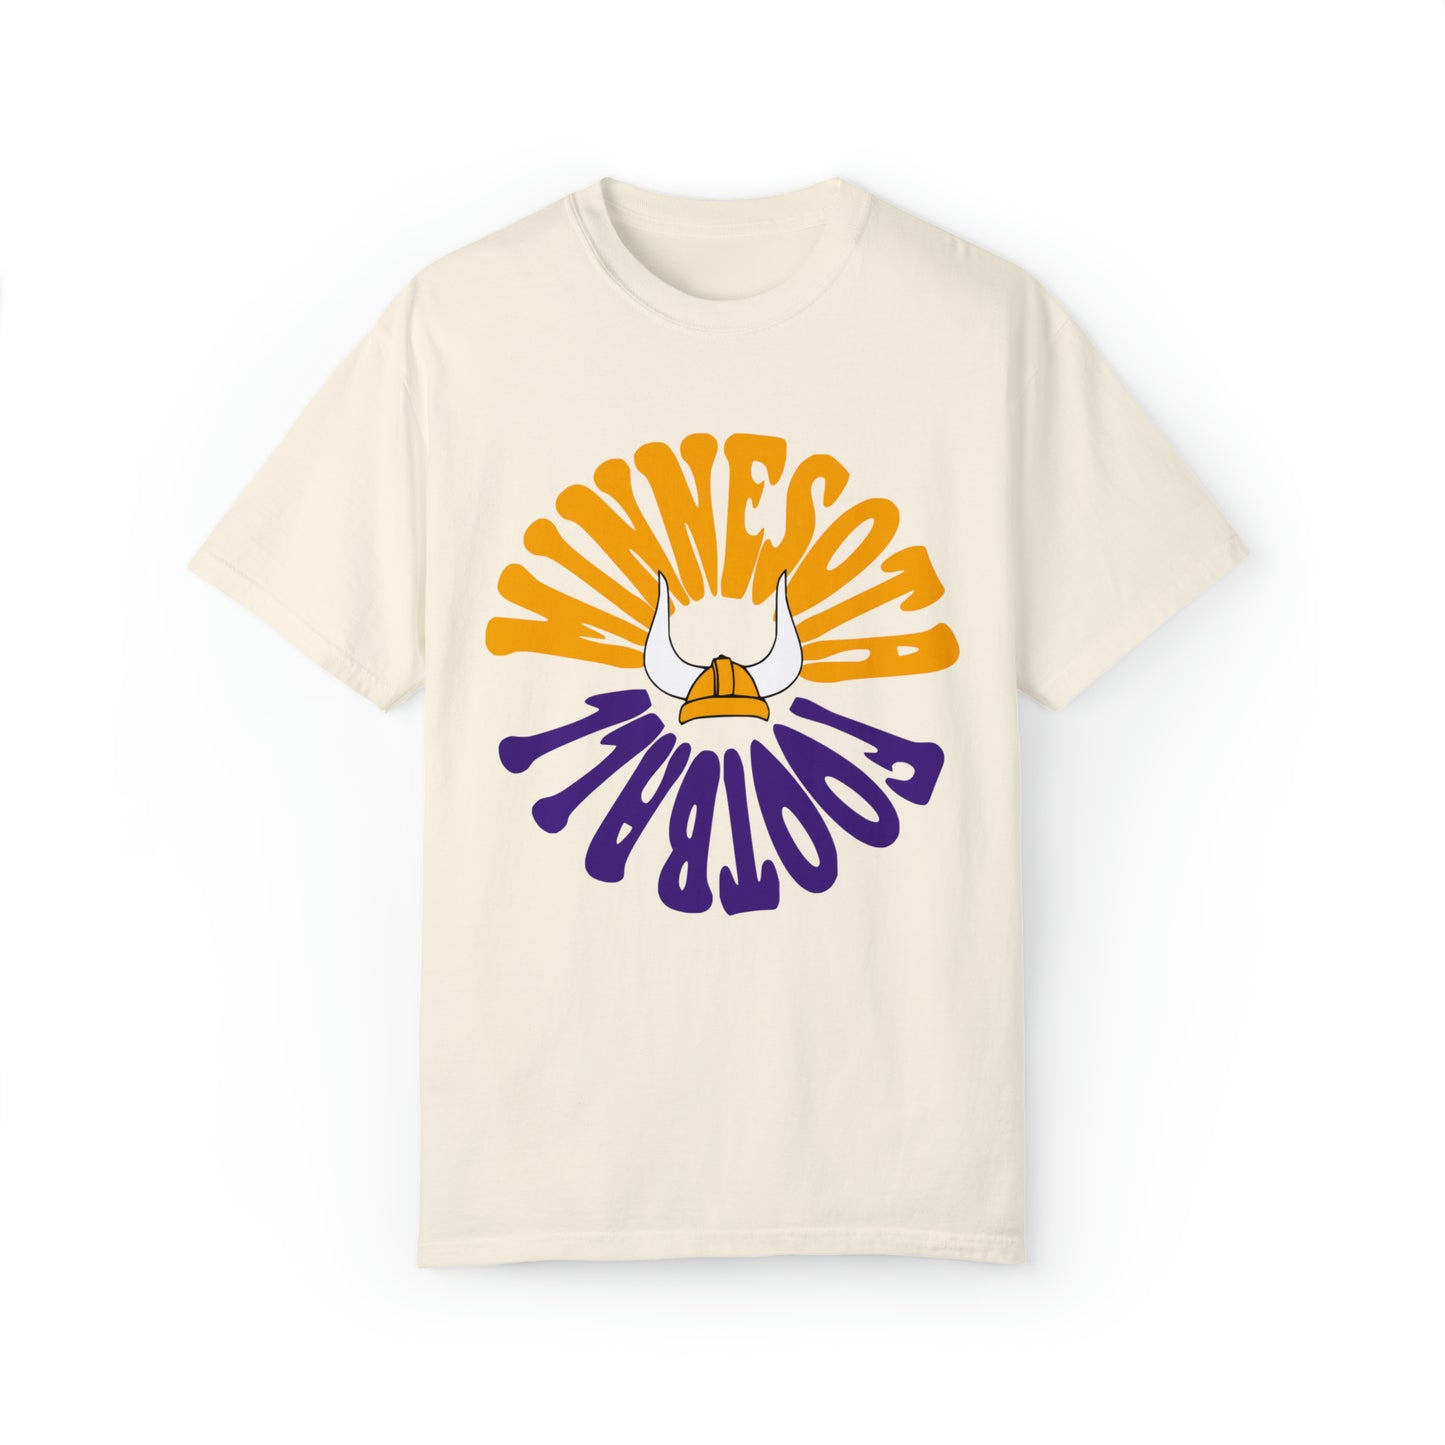 Comfort Colors Hippy Retro Minnesota Vikings NFL Football Tee - Short Sleeve T-Shirt Unisex Men's Women's Oversized Apparel - Design 2